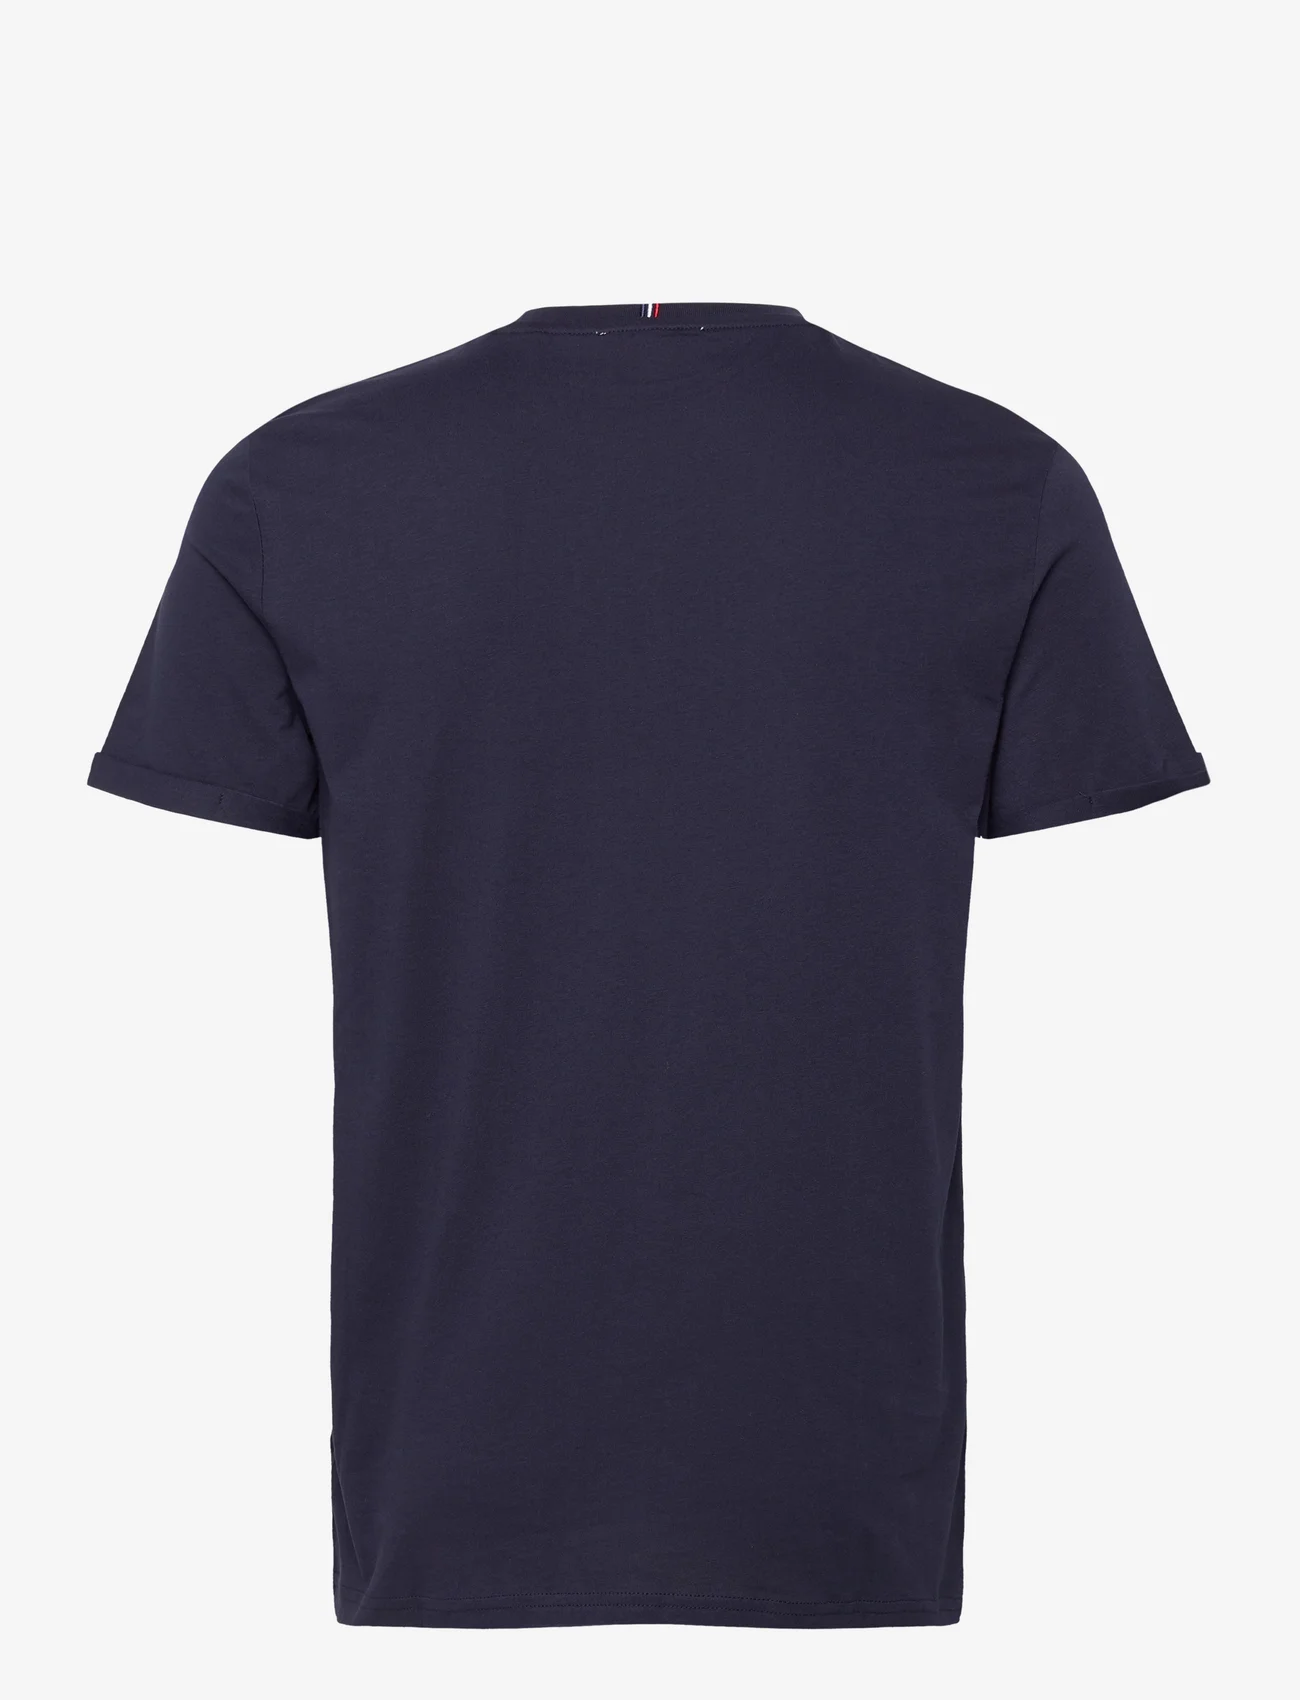 Les Deux - Les Deux II T-Shirt 2.0 - marškinėliai trumpomis rankovėmis - dark navy/platinum - 1